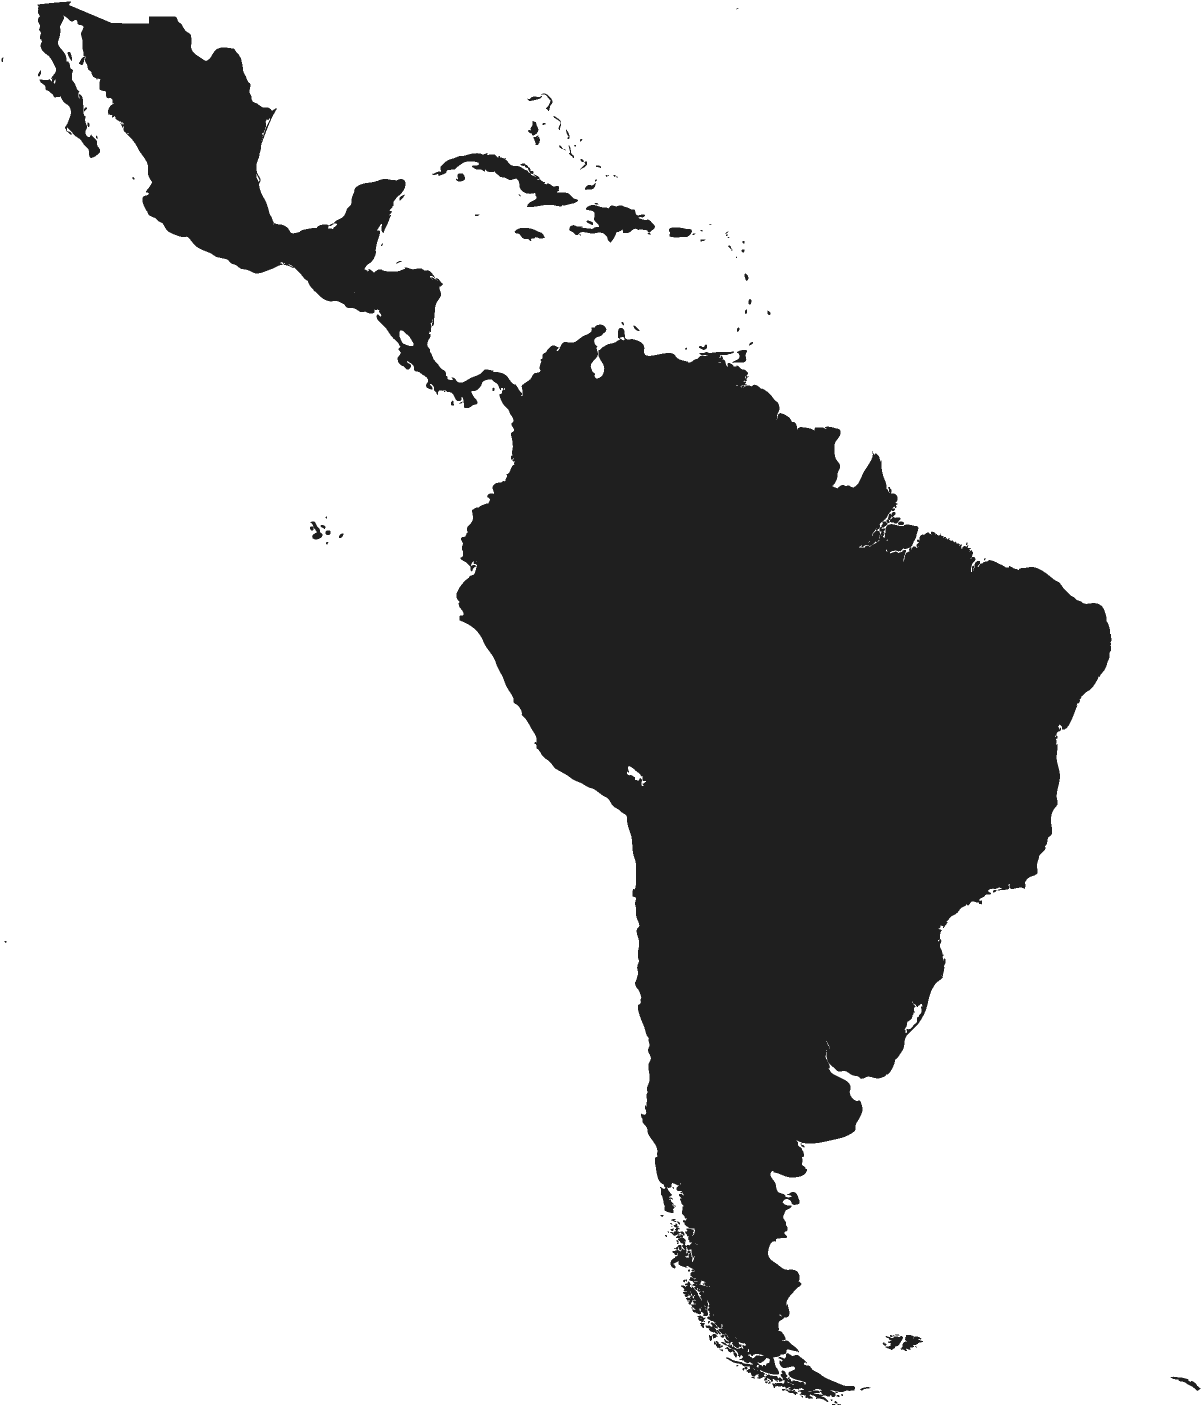 Strikingly Inpiration South America Silhouette At Getdrawings - South America Silhouette Png (4998x2124)